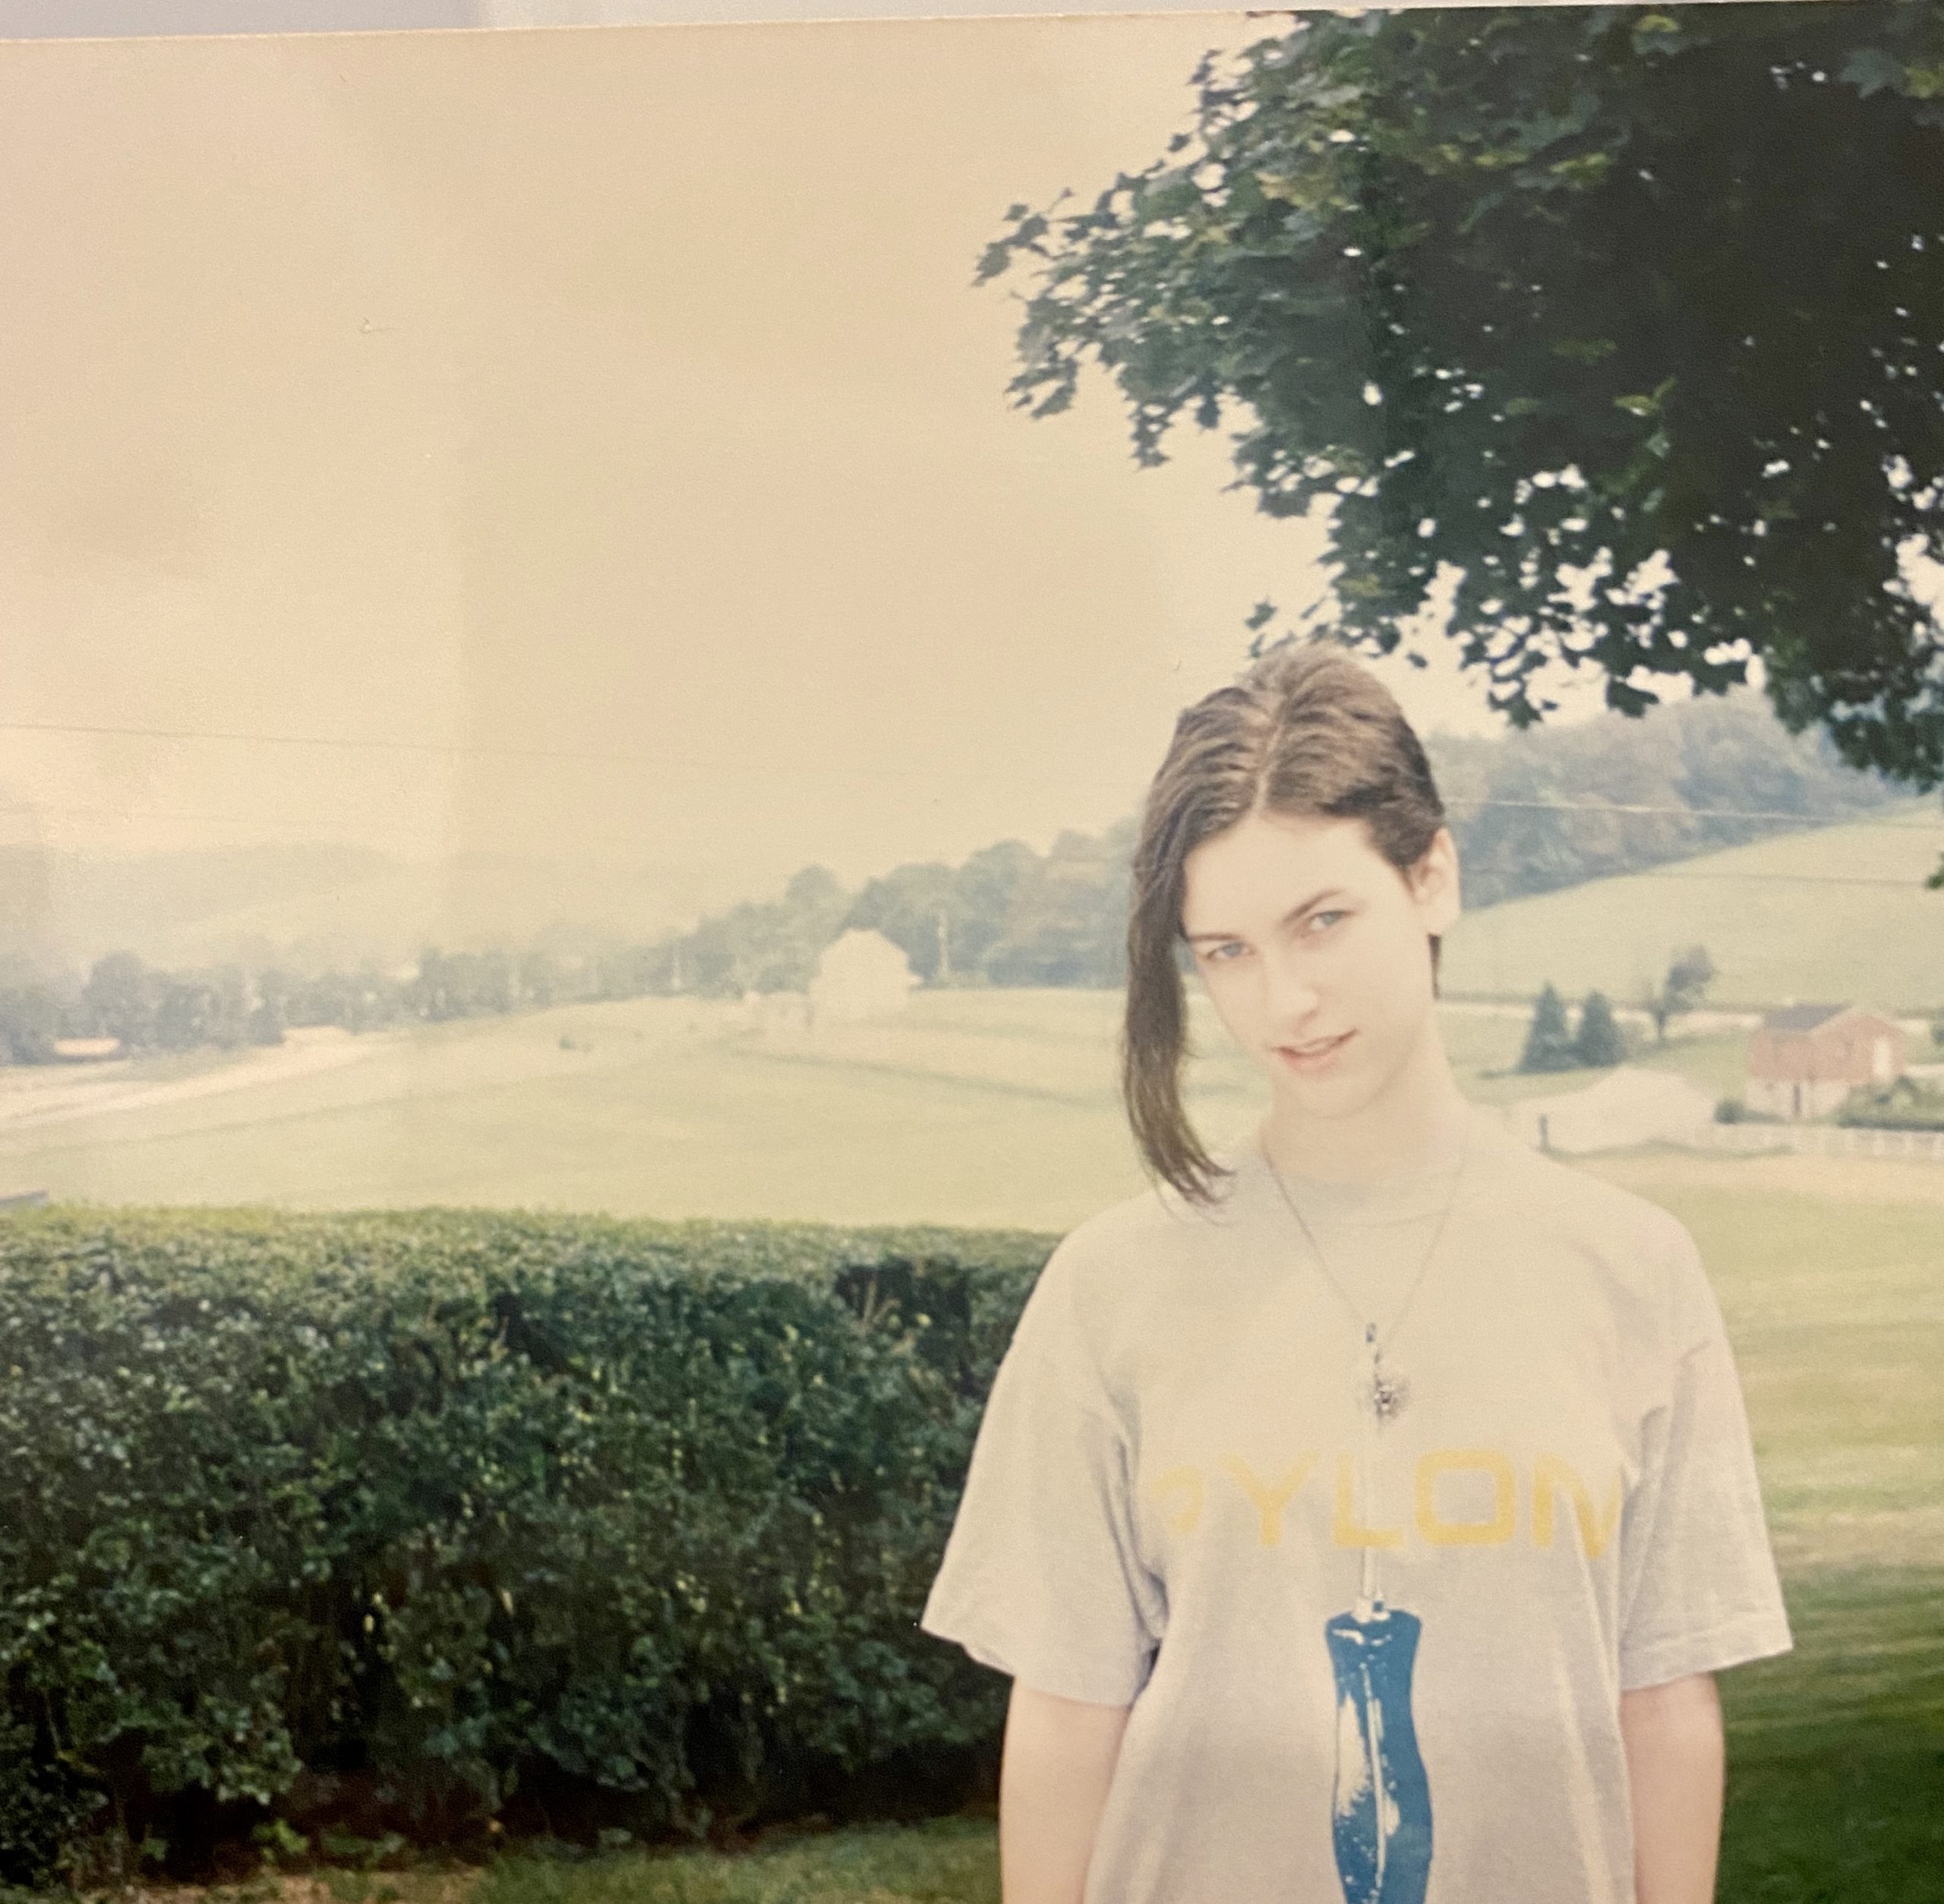 Sarah in 1991 in Pylon t-shirt